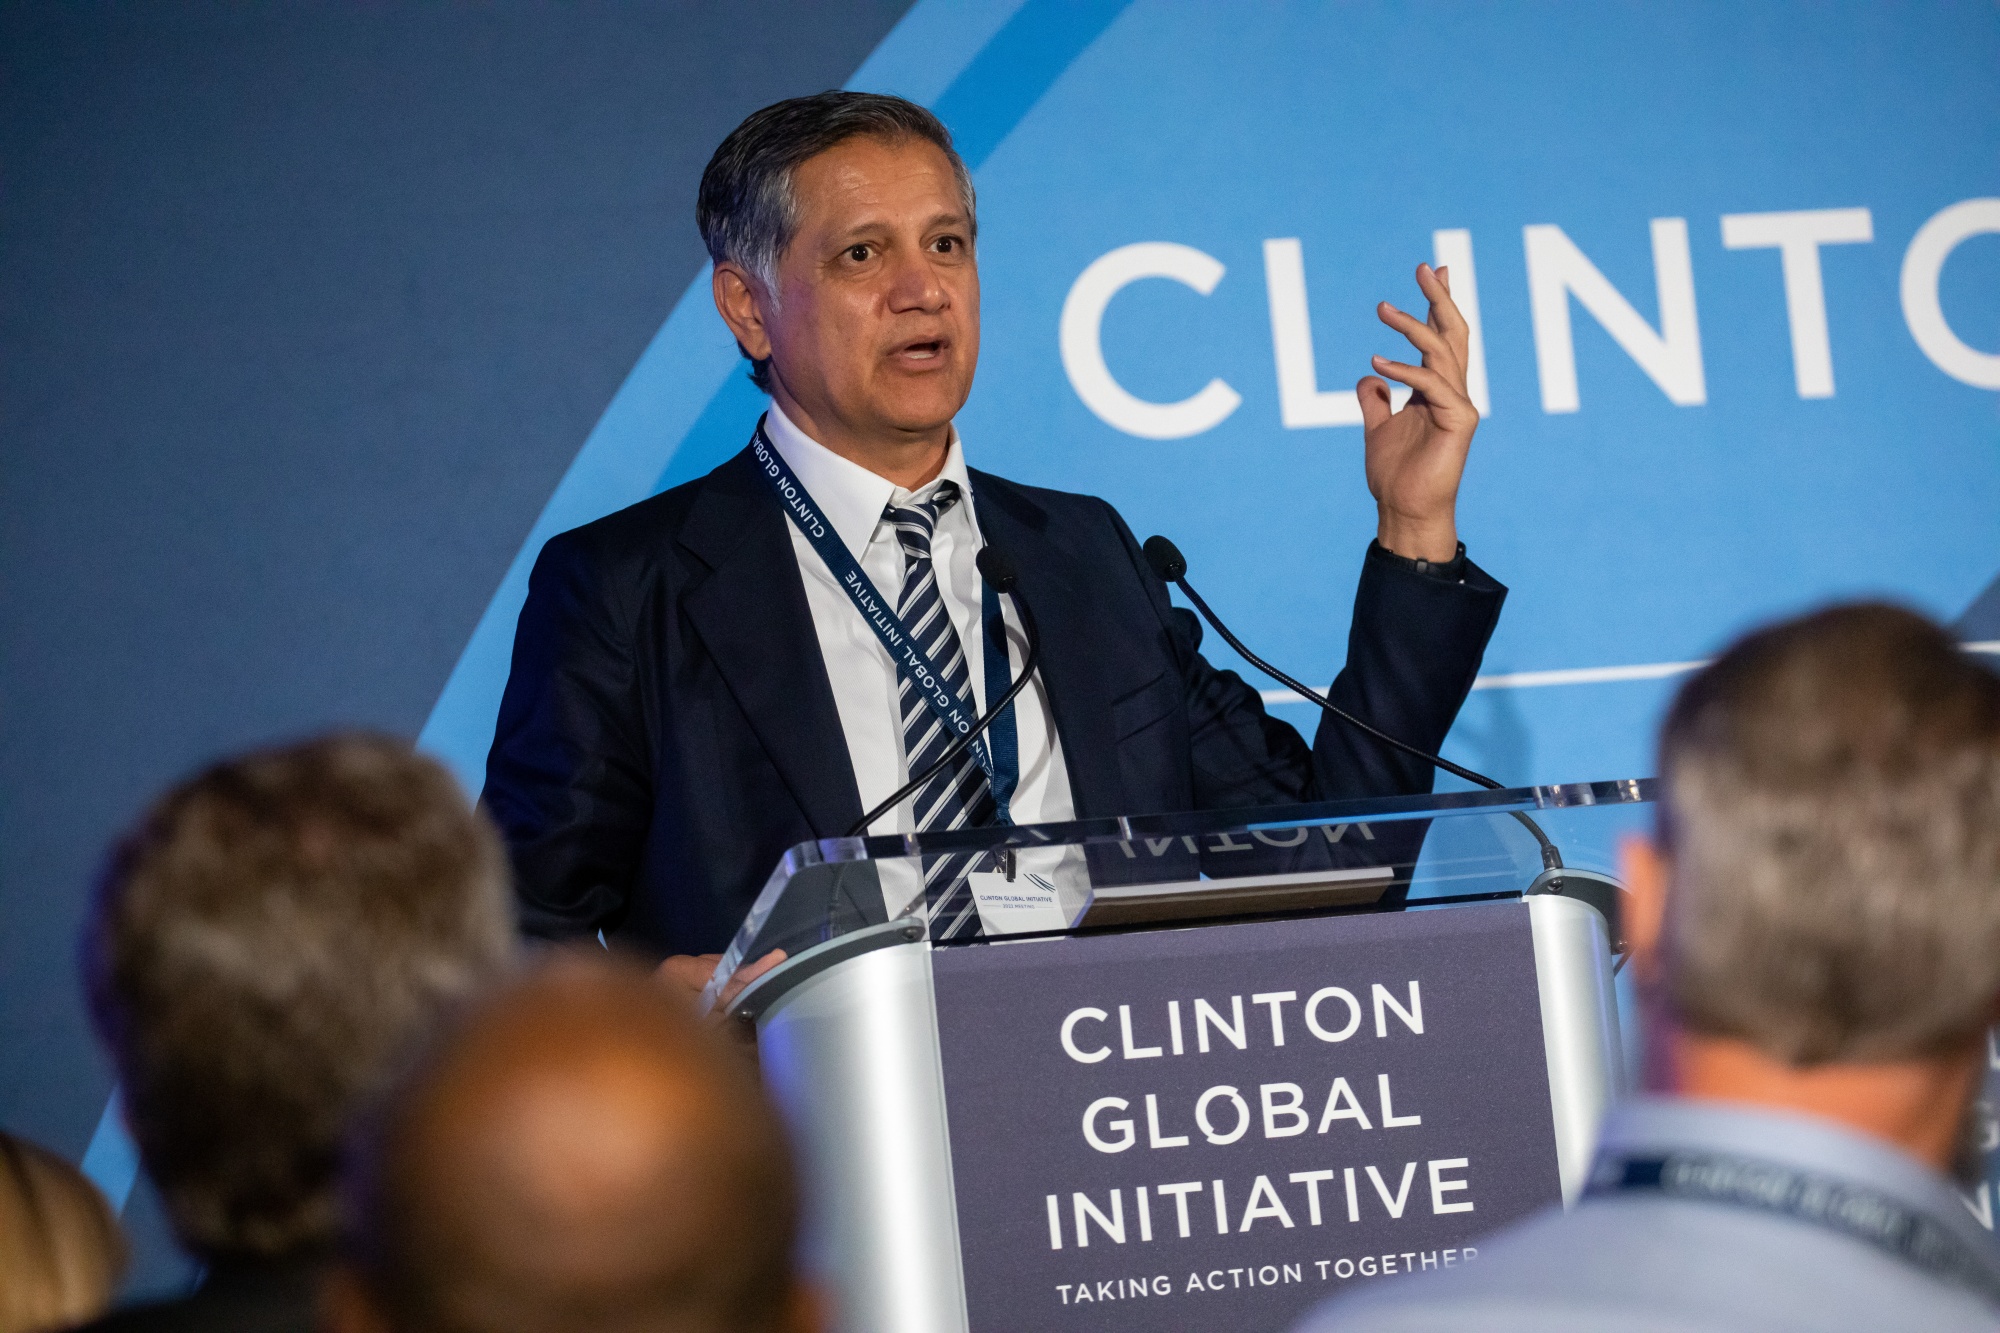 Key Speakers At The Clinton Global Initiative Meeting